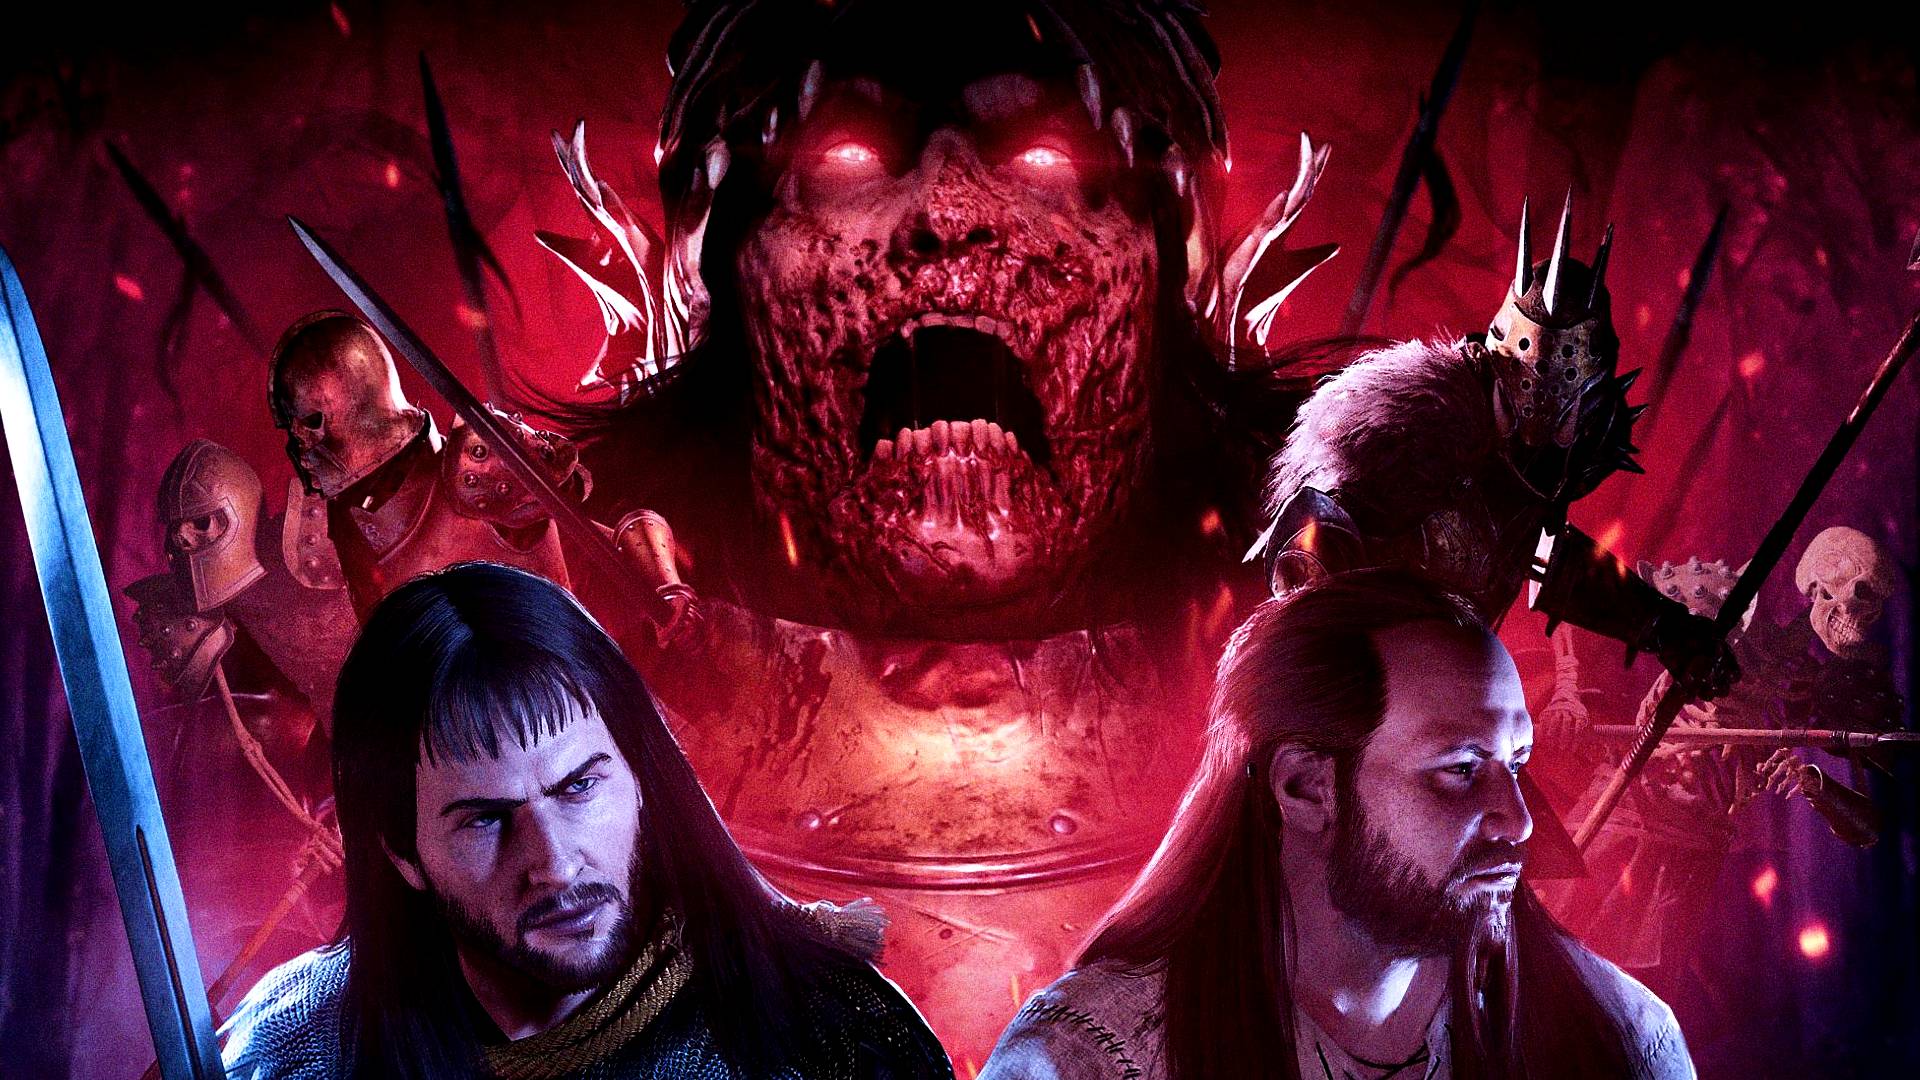 Evil Dead: The Game' trailer shows a brutal multiplayer battle with Deadites